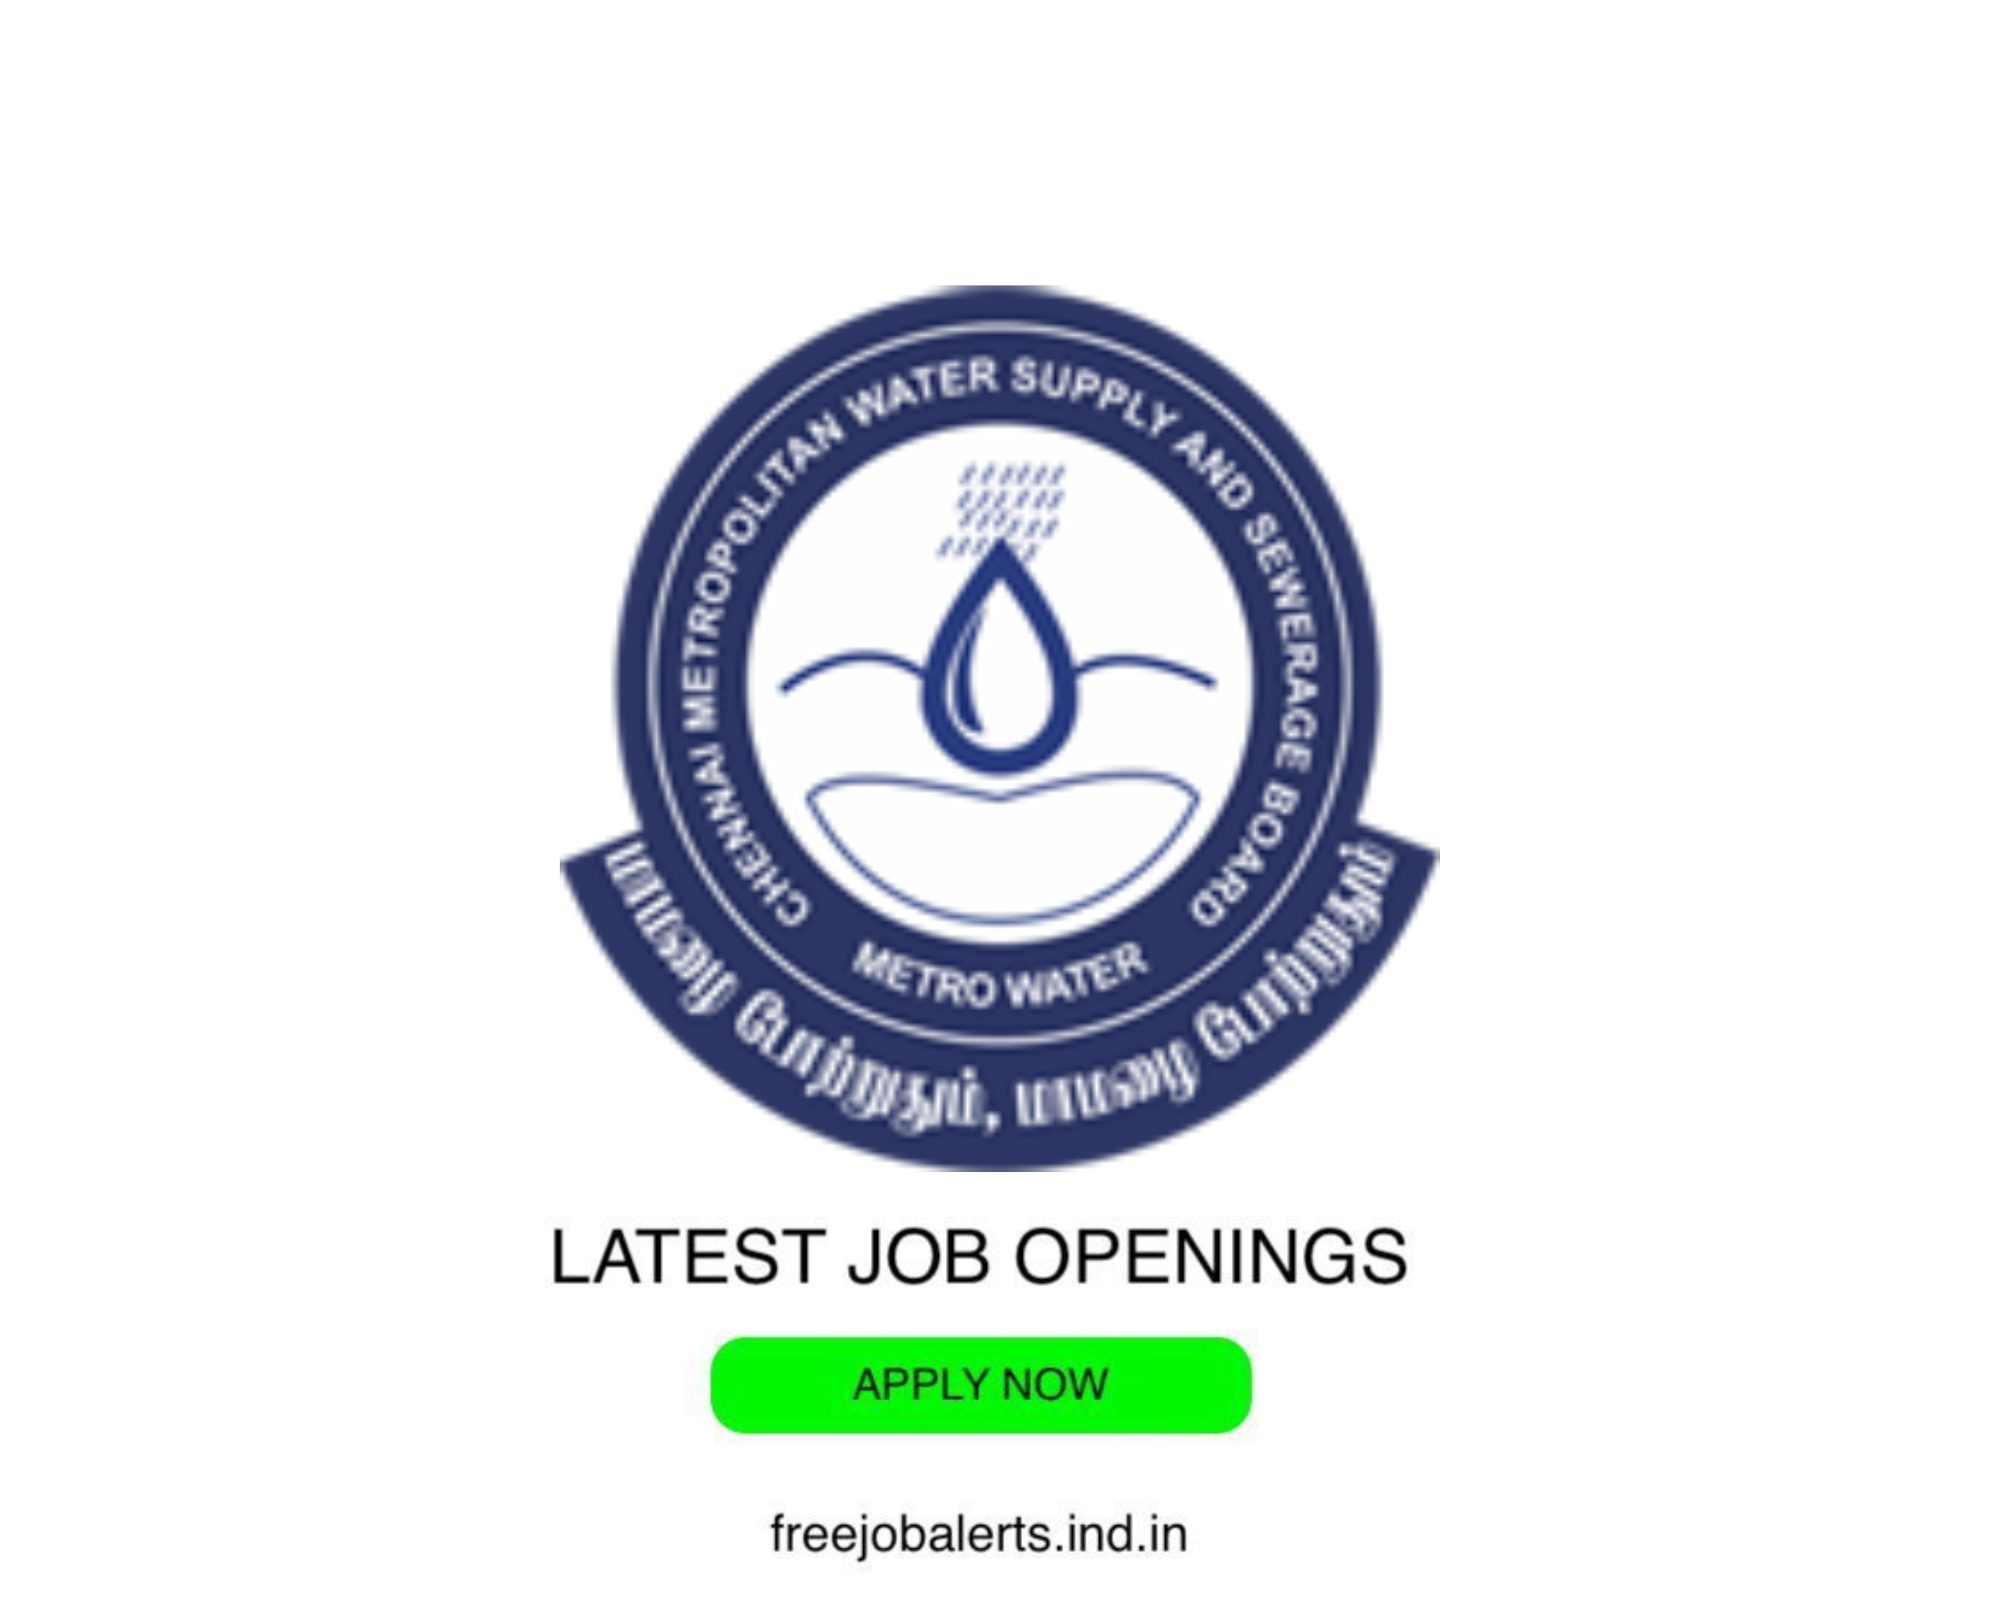 CMWSSB - Chennai Metropolitan Water Supply and Sewerage Board - Latest Govt job openings - Free job alerts, Indian Govt Jobs